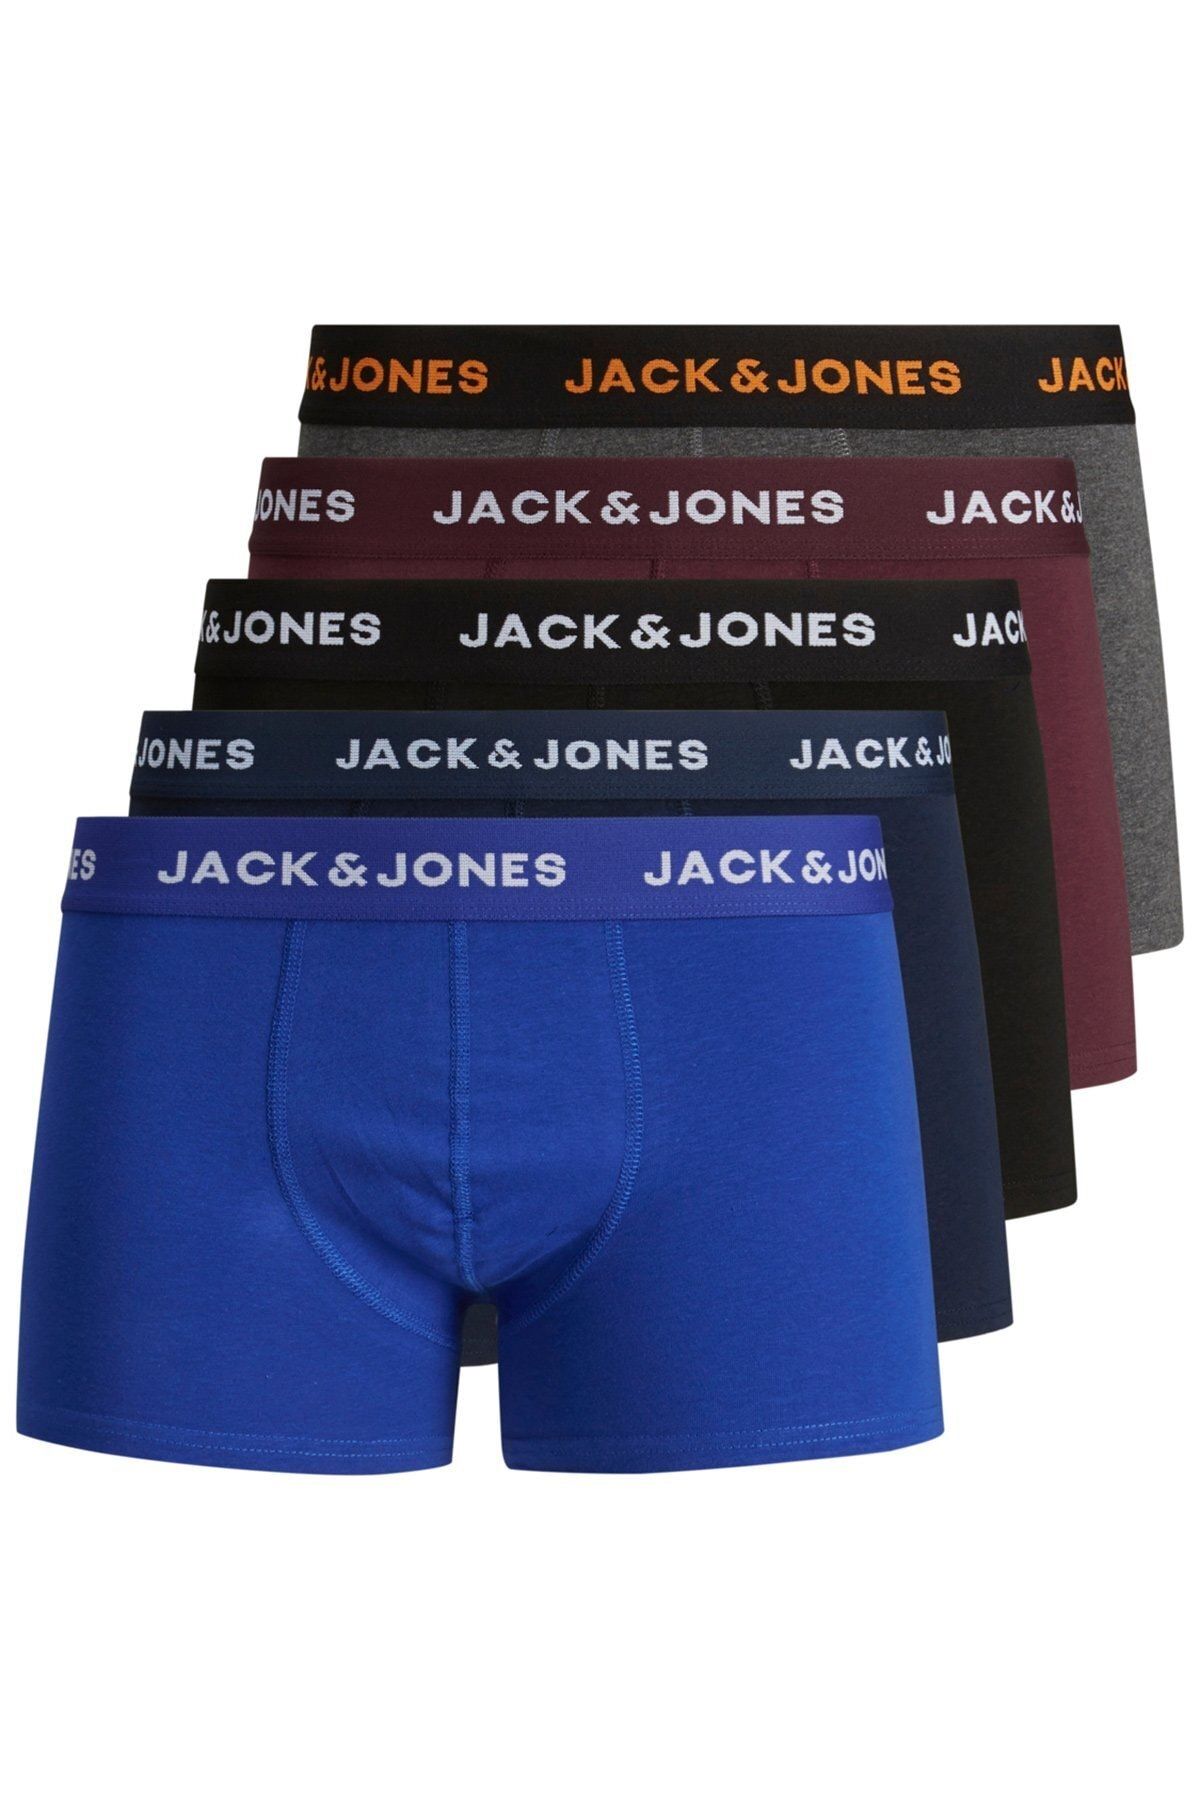 Jack & Jones Jackblack Frıday Trunks 5'lş Boxer 12169662